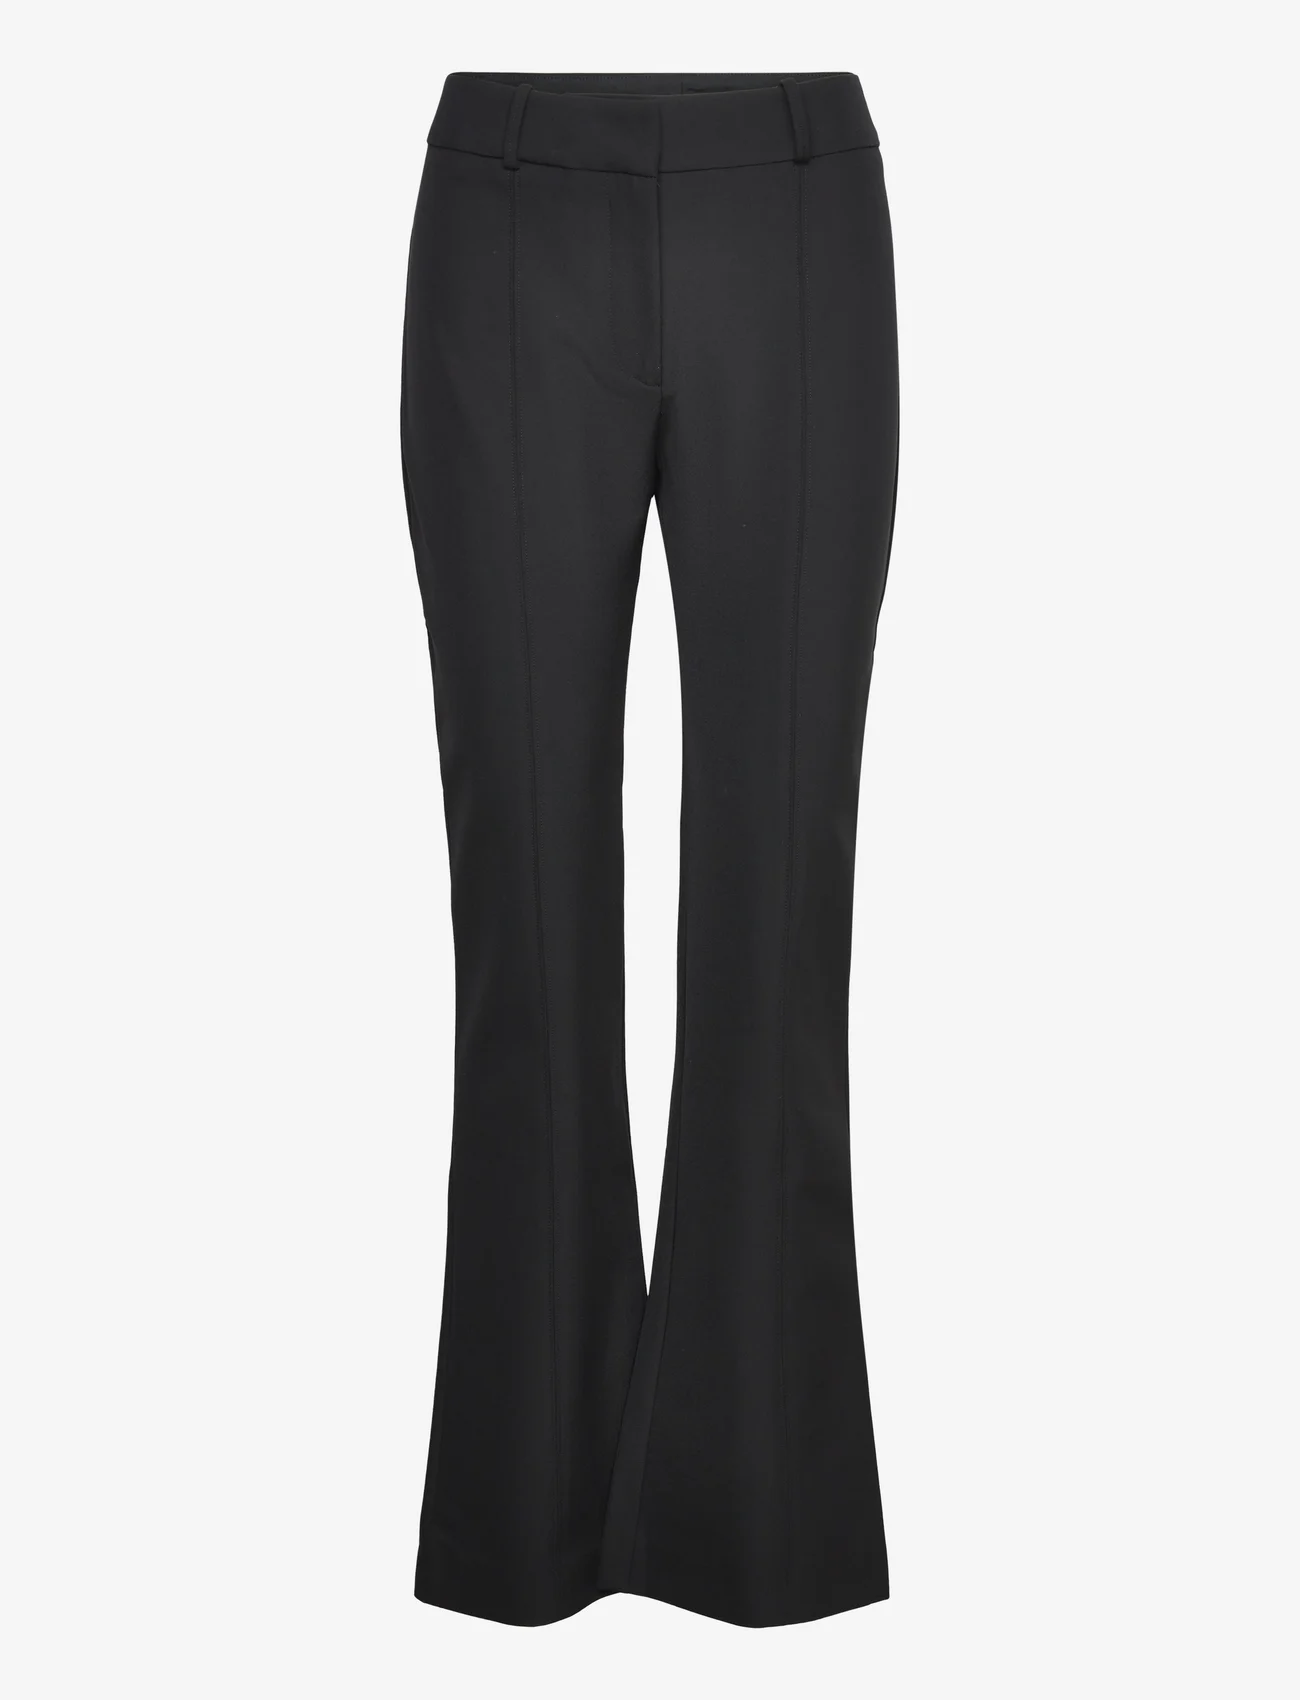 Samsøe Samsøe - Sarih trousers 14212 - kostymbyxor - black - 0